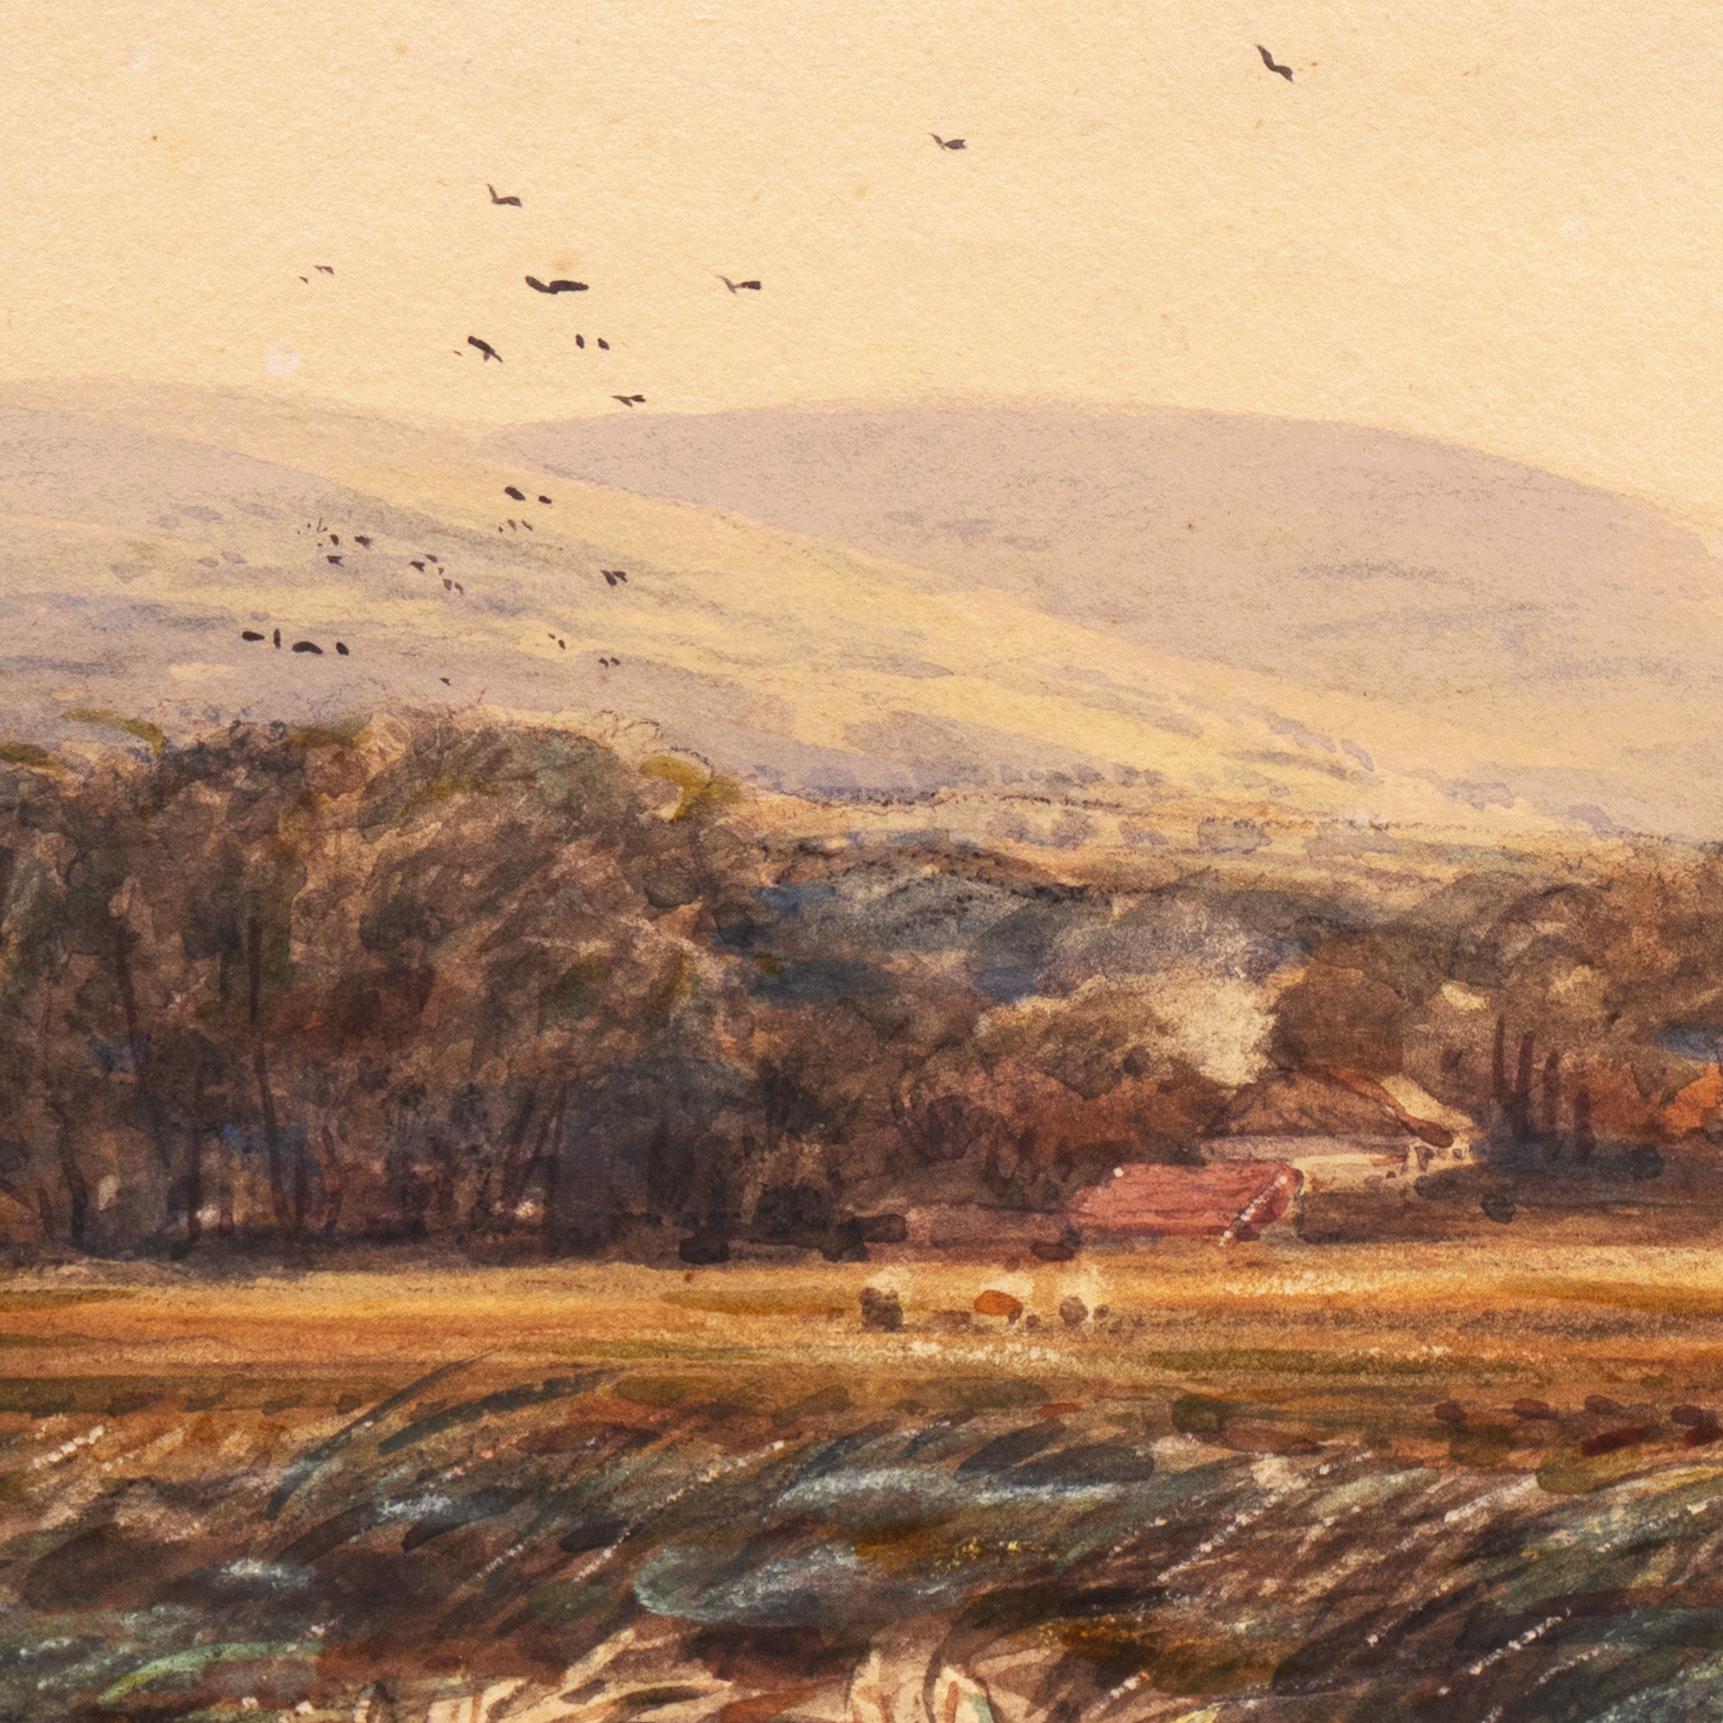 'Village with Church Spire', English mid-19th Century Watercolor, David Cox - Orange Landscape Art by James Orrock